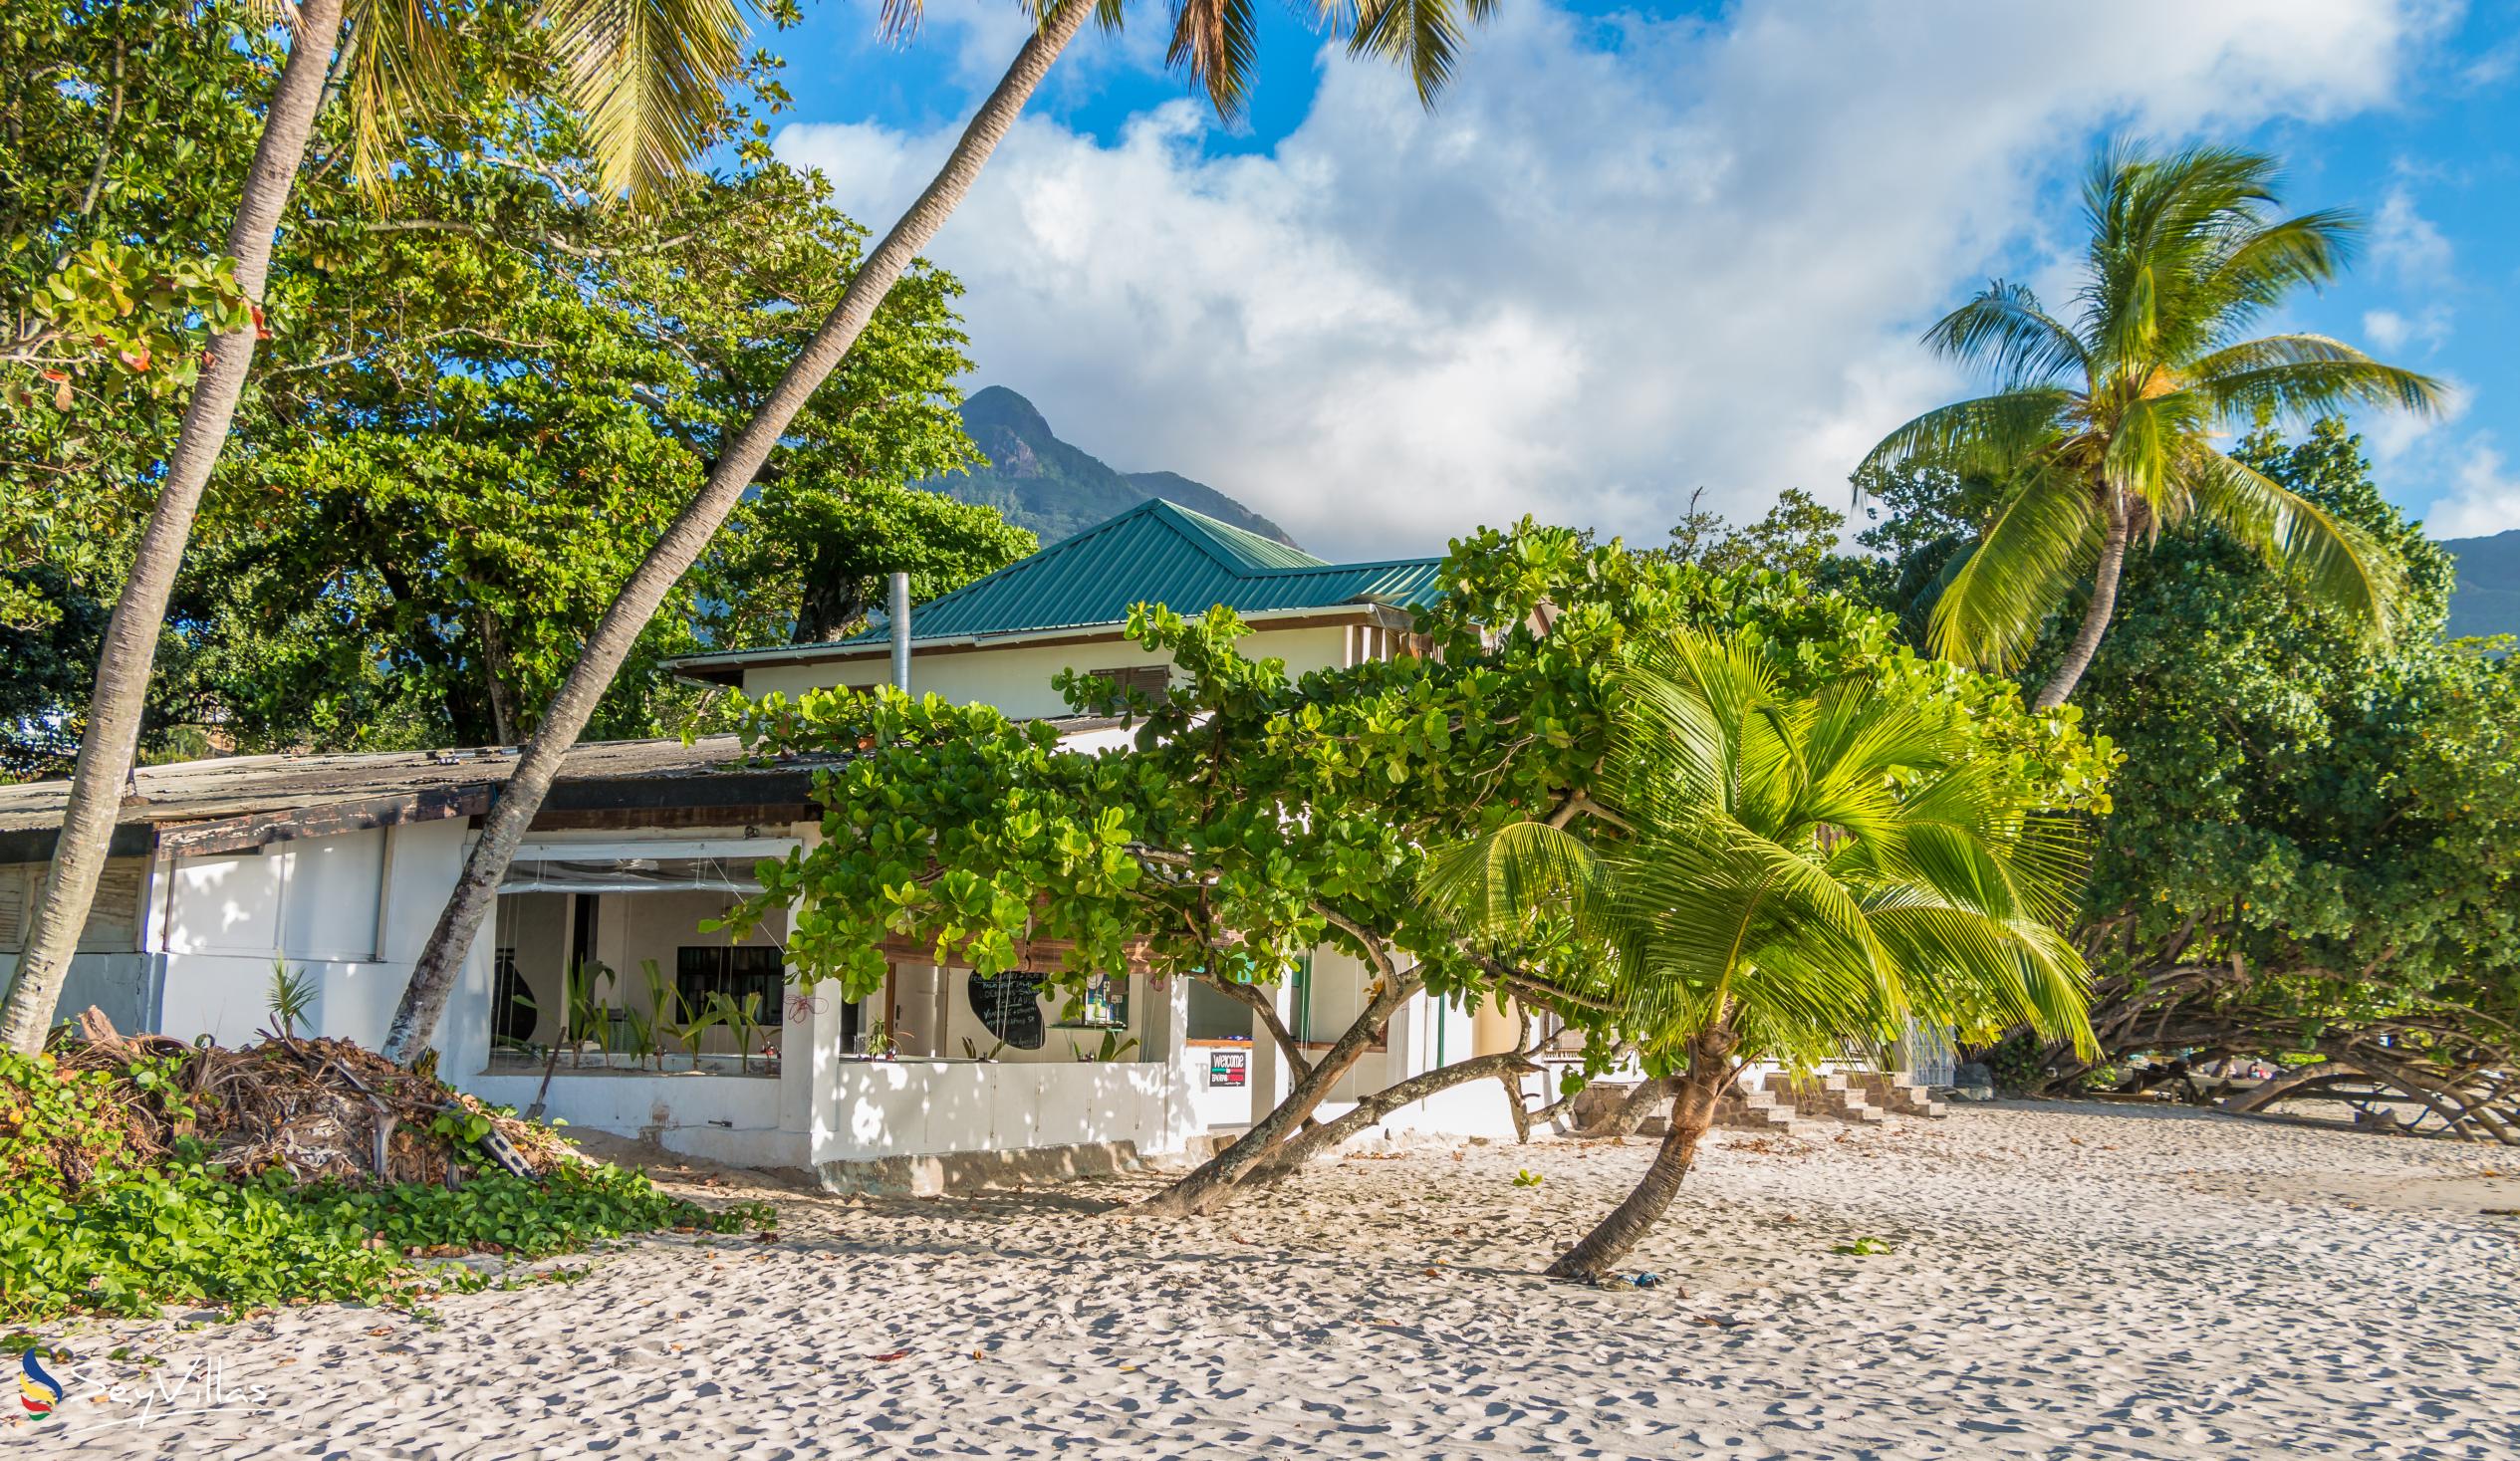 Foto 17: Villa Roscia - Spiagge - Mahé (Seychelles)